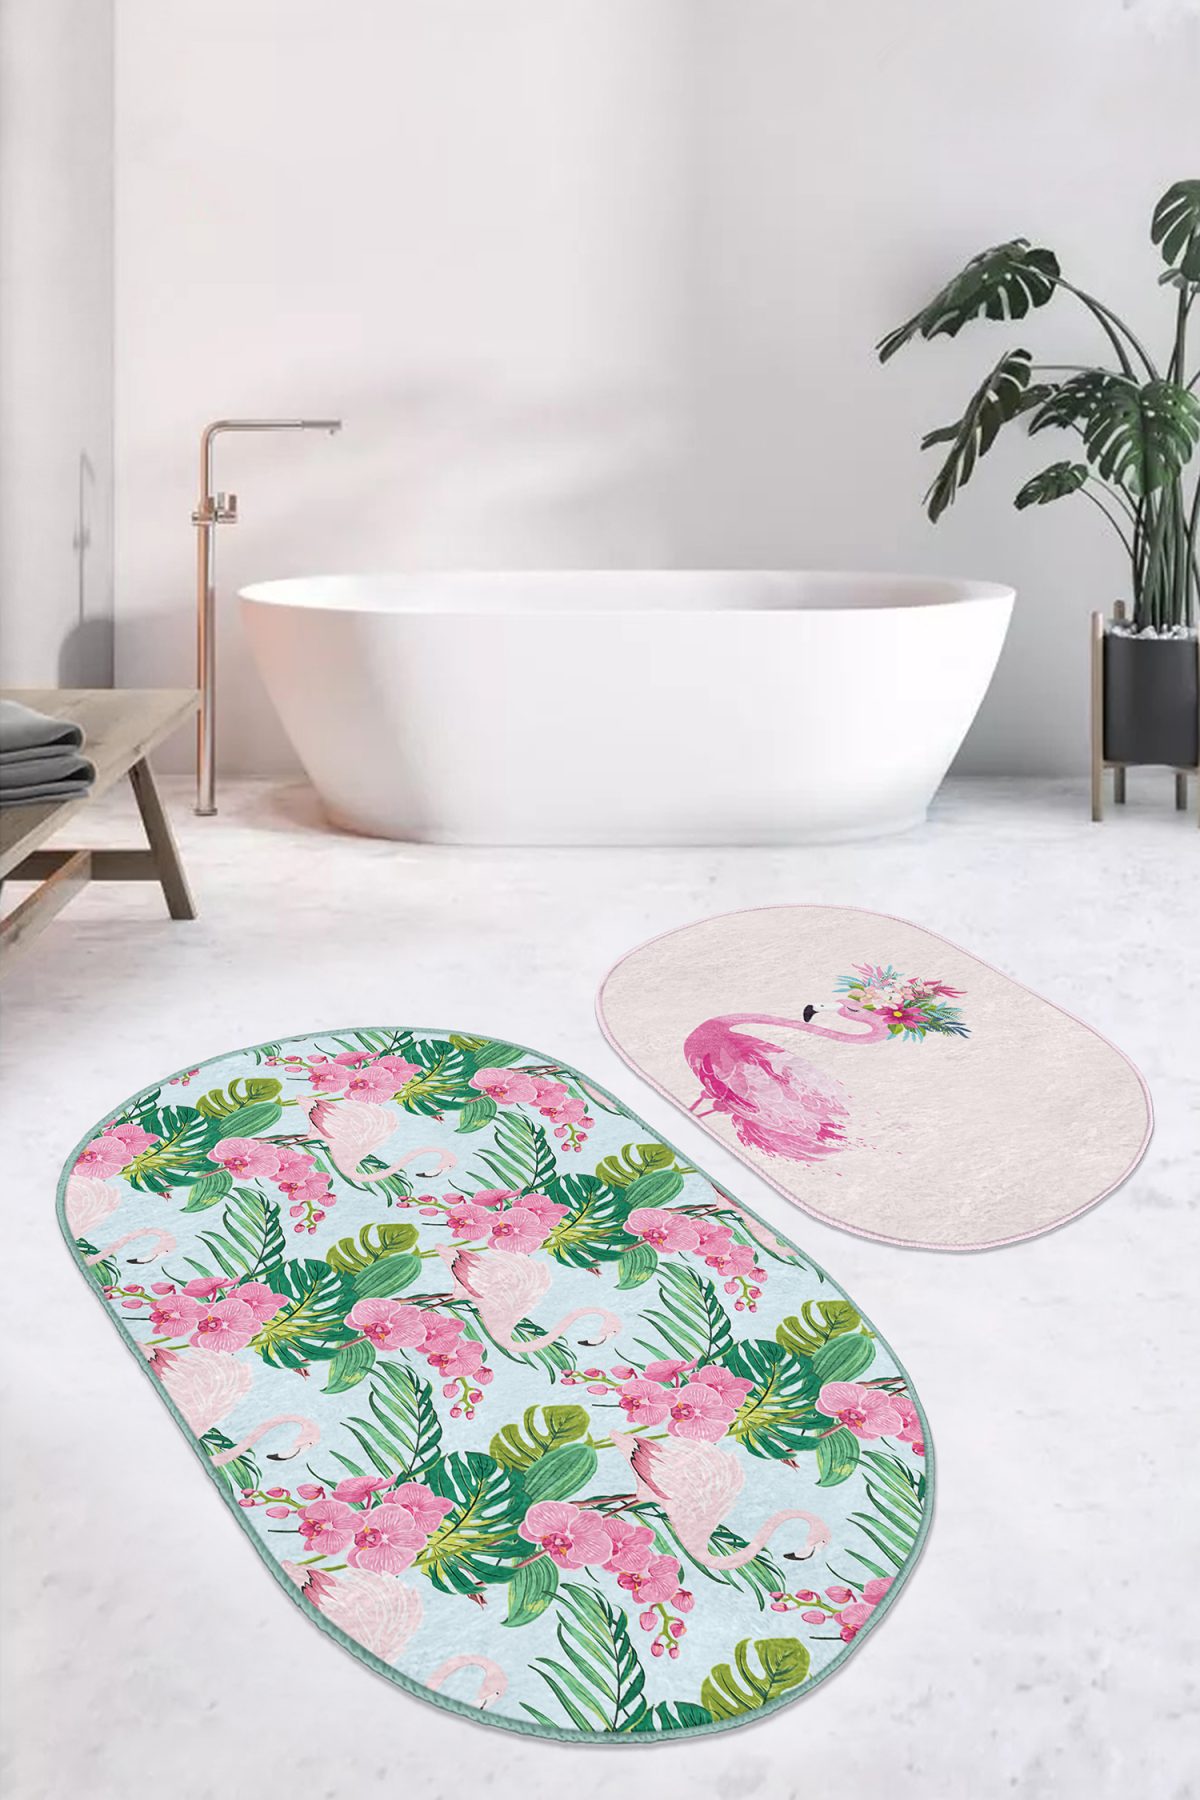 Flamingo Motifli Renkli 2'li Oval Kaymaz Tabanlı Banyo Paspas Takımı & Banyo Halı Seti Realhomes